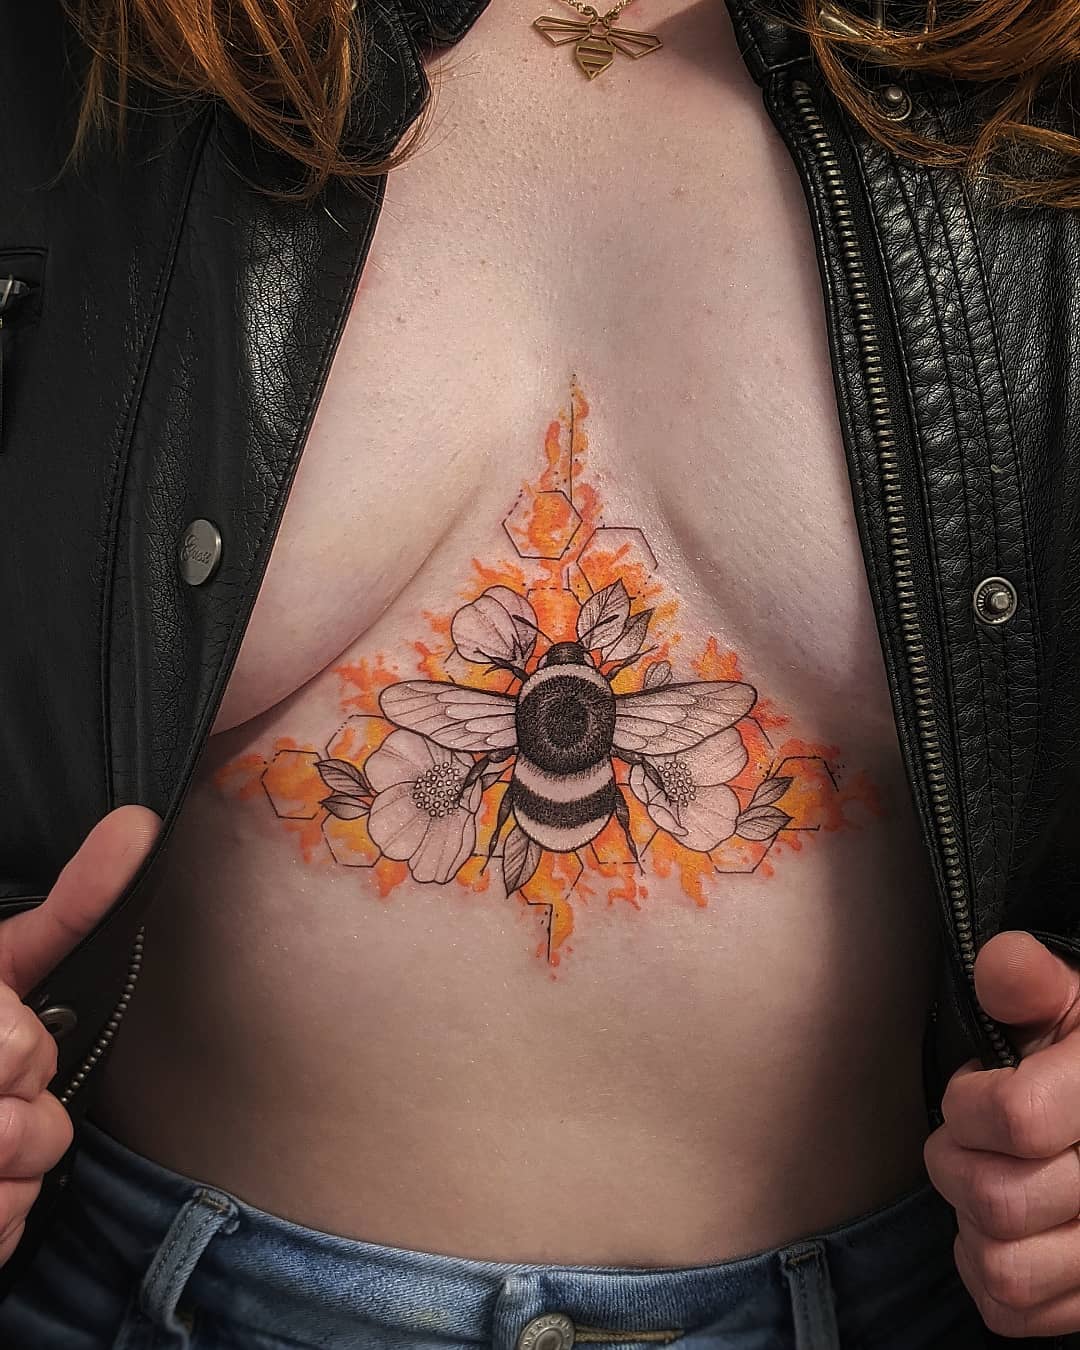 Honeycomb tattoo